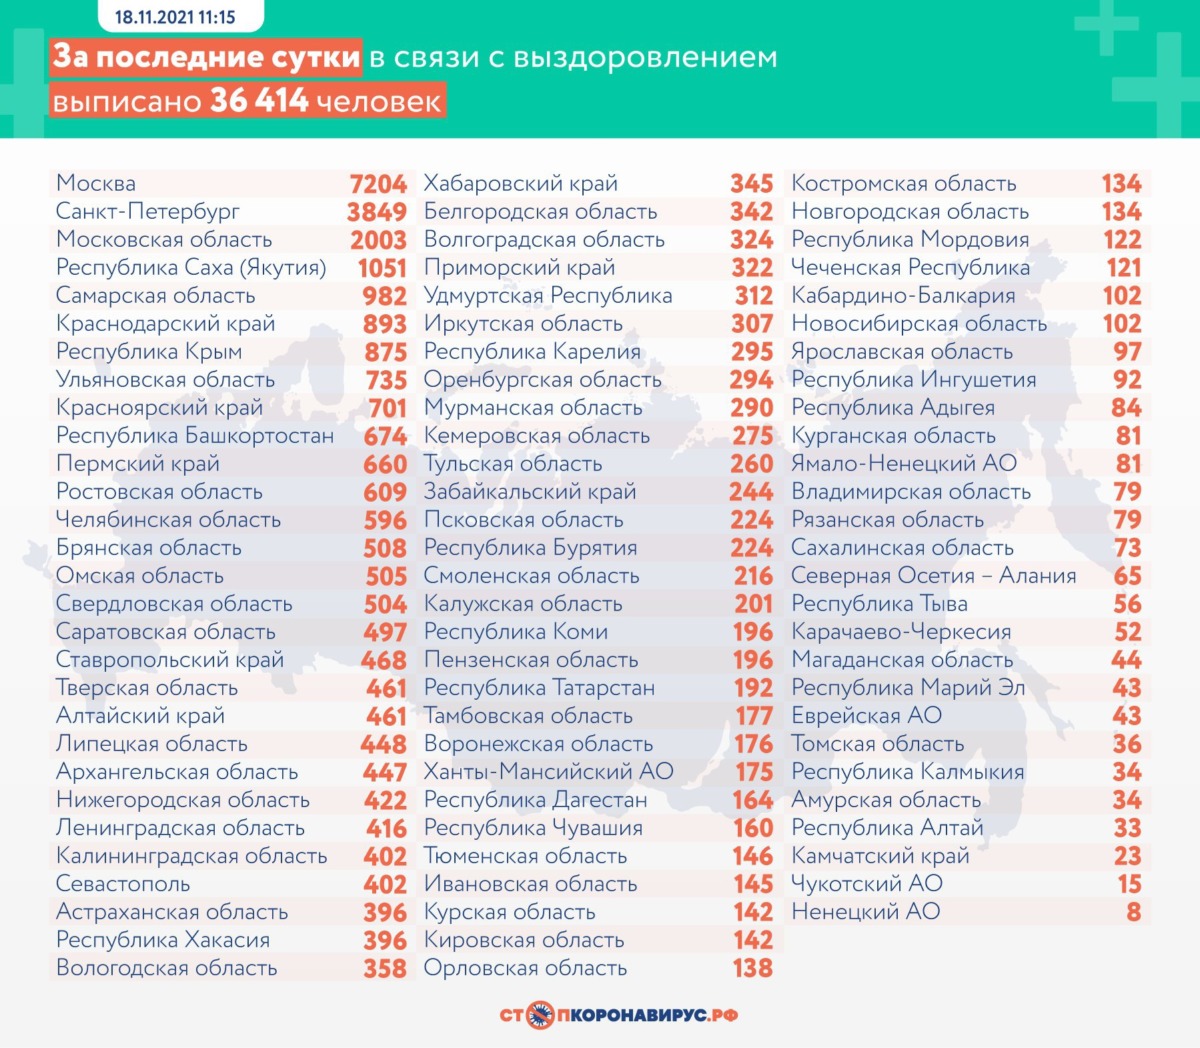 Оперативная статистика по коронавирусу в России на 18 ноября